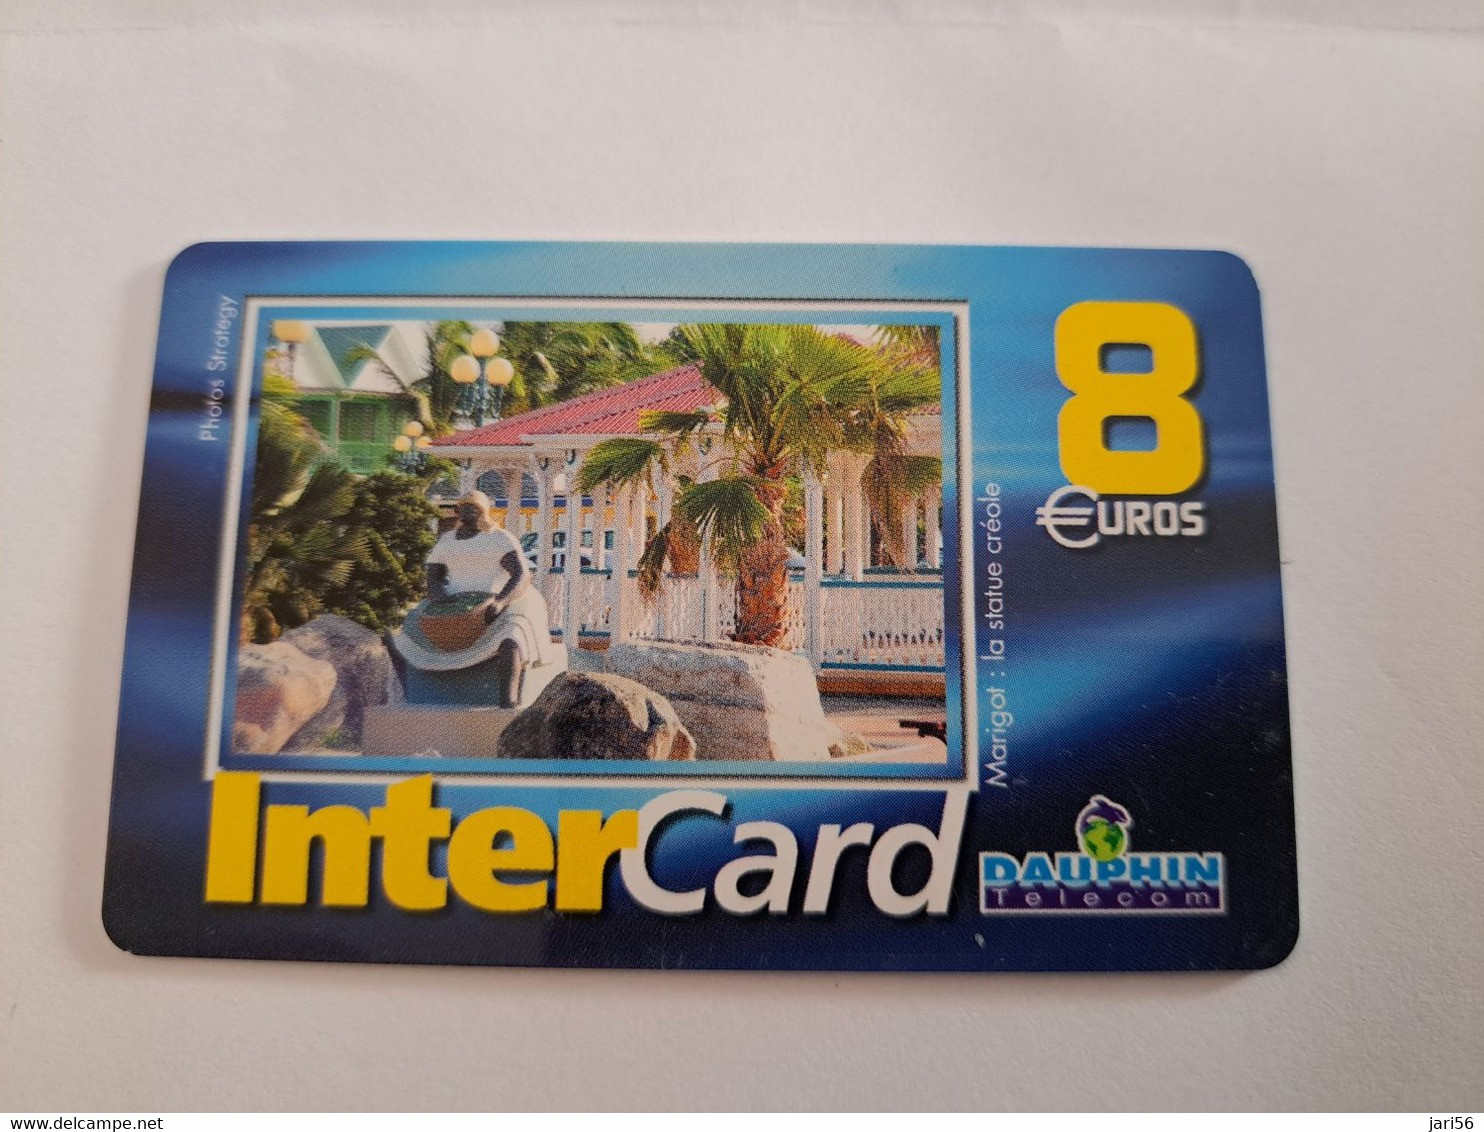 ST MARTIN / INTERCARD  8 EURO  MARIGOT LA STATUE CREOLE      NO 010   Fine Used Card    ** 10897** - Antillas (Francesas)